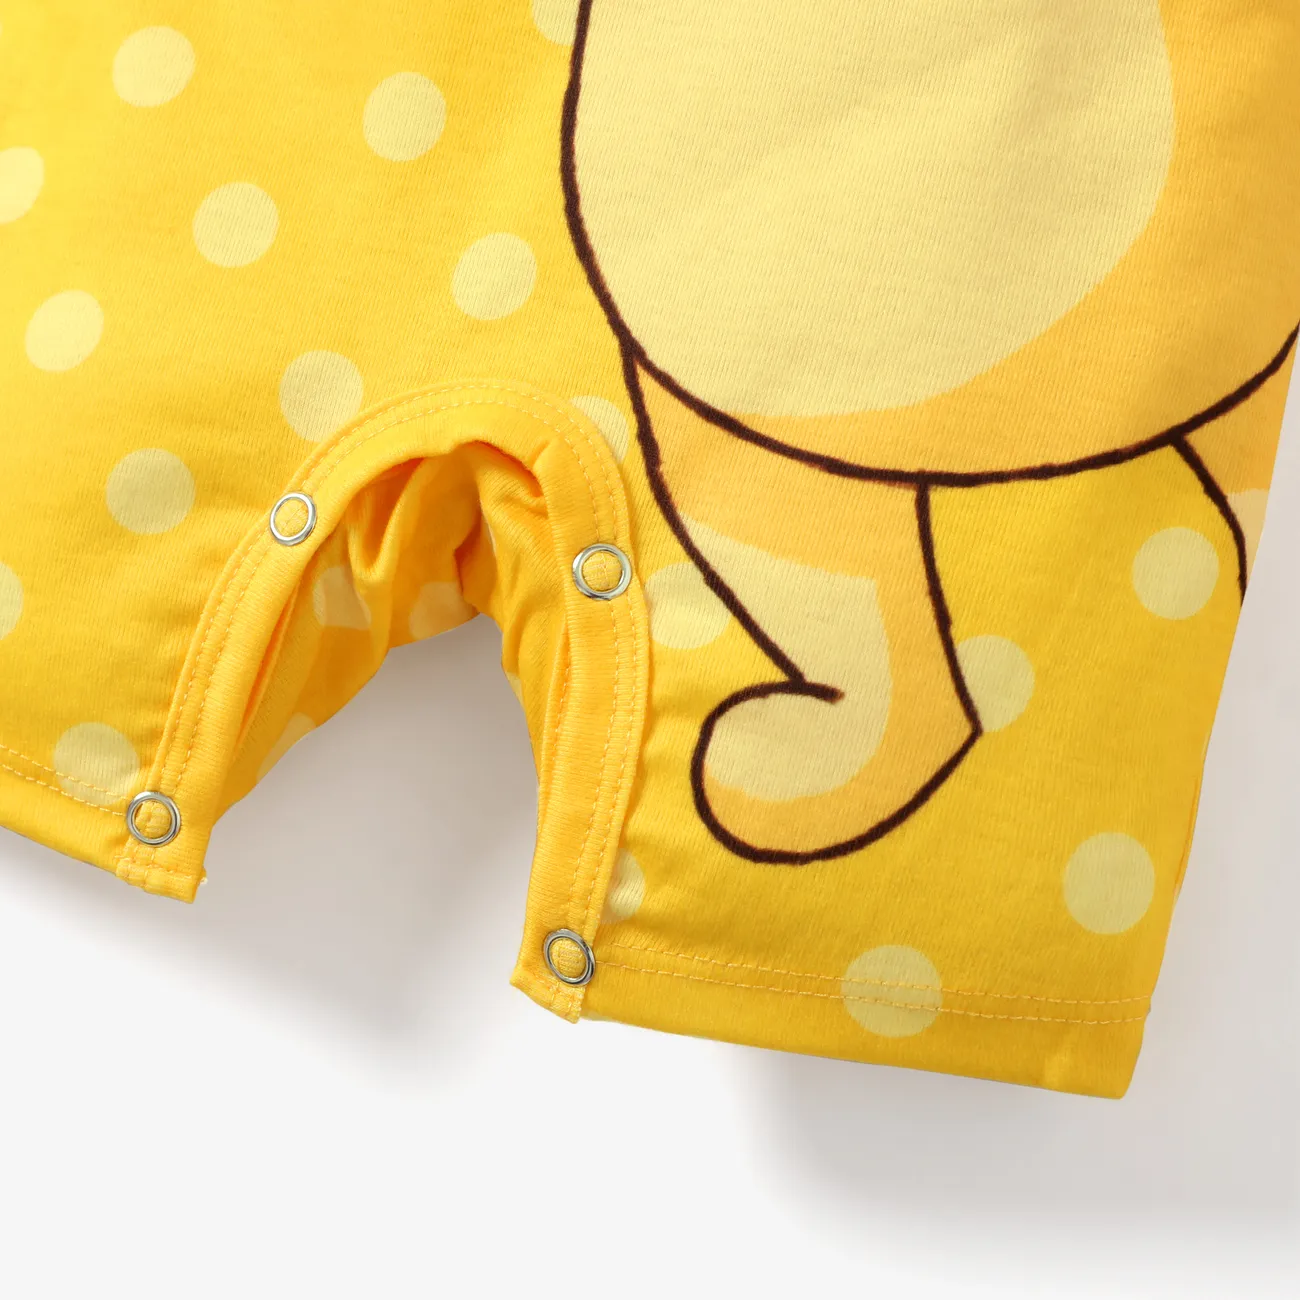 Disney Winnie the Pooh 1pc Baby Boys/Girls Naia™ Character Striped/Polka Dot Bodysuit

 LightYellow big image 1